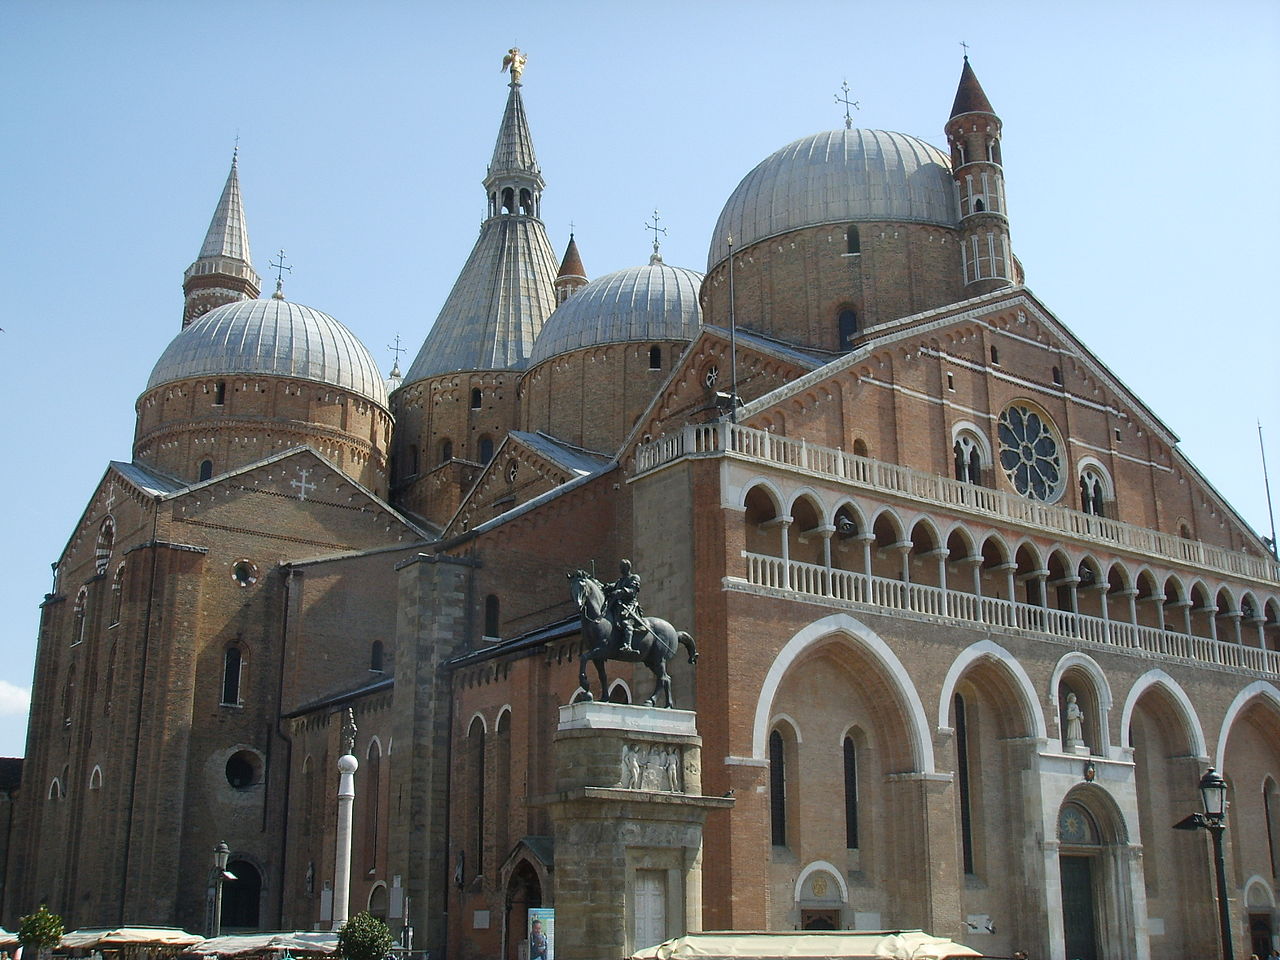 The Pontifical Basilica of Saint Anthony of Padua